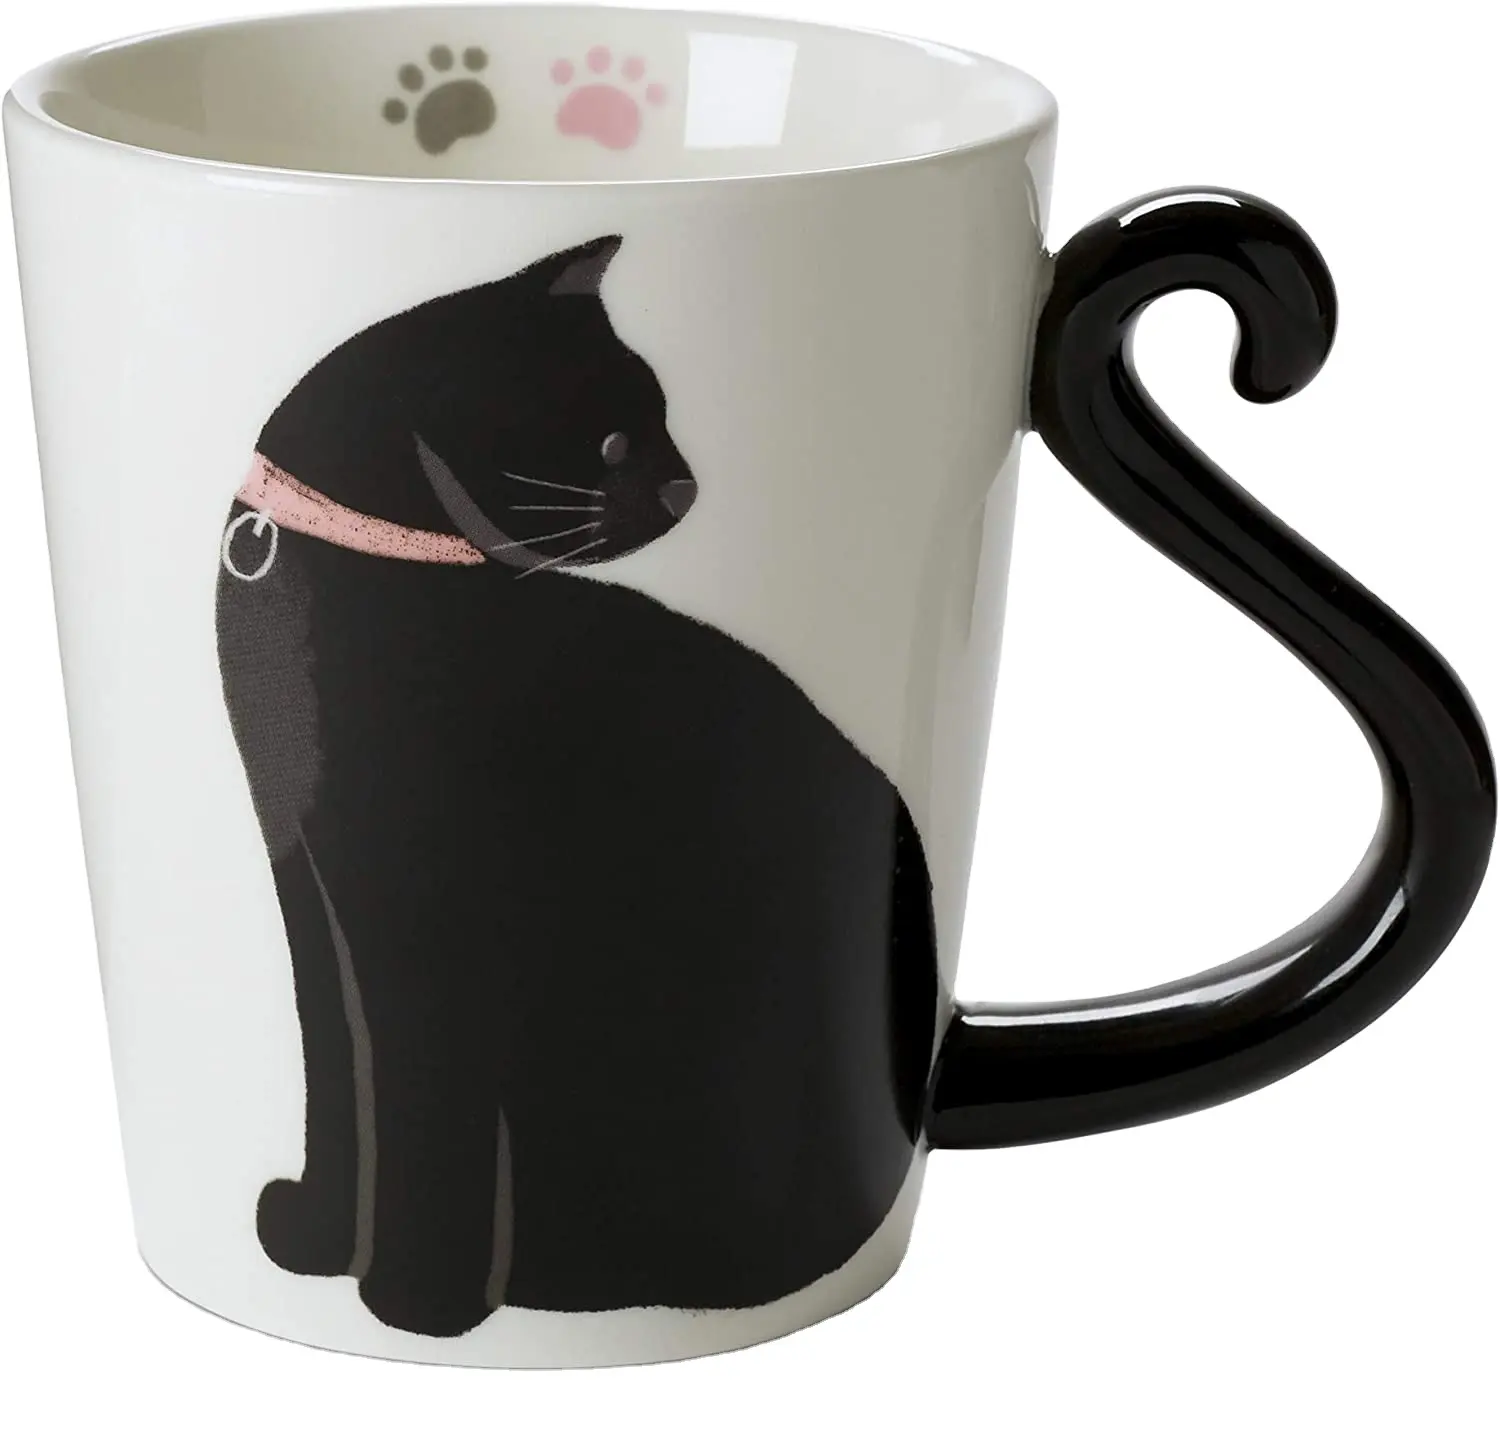 Cute Handmade Mug with a Fun Cat Tail Handle Ceramic Cat Shaped Coffee Mug with Hand Printed Designs&Text Large Capacity 18oz